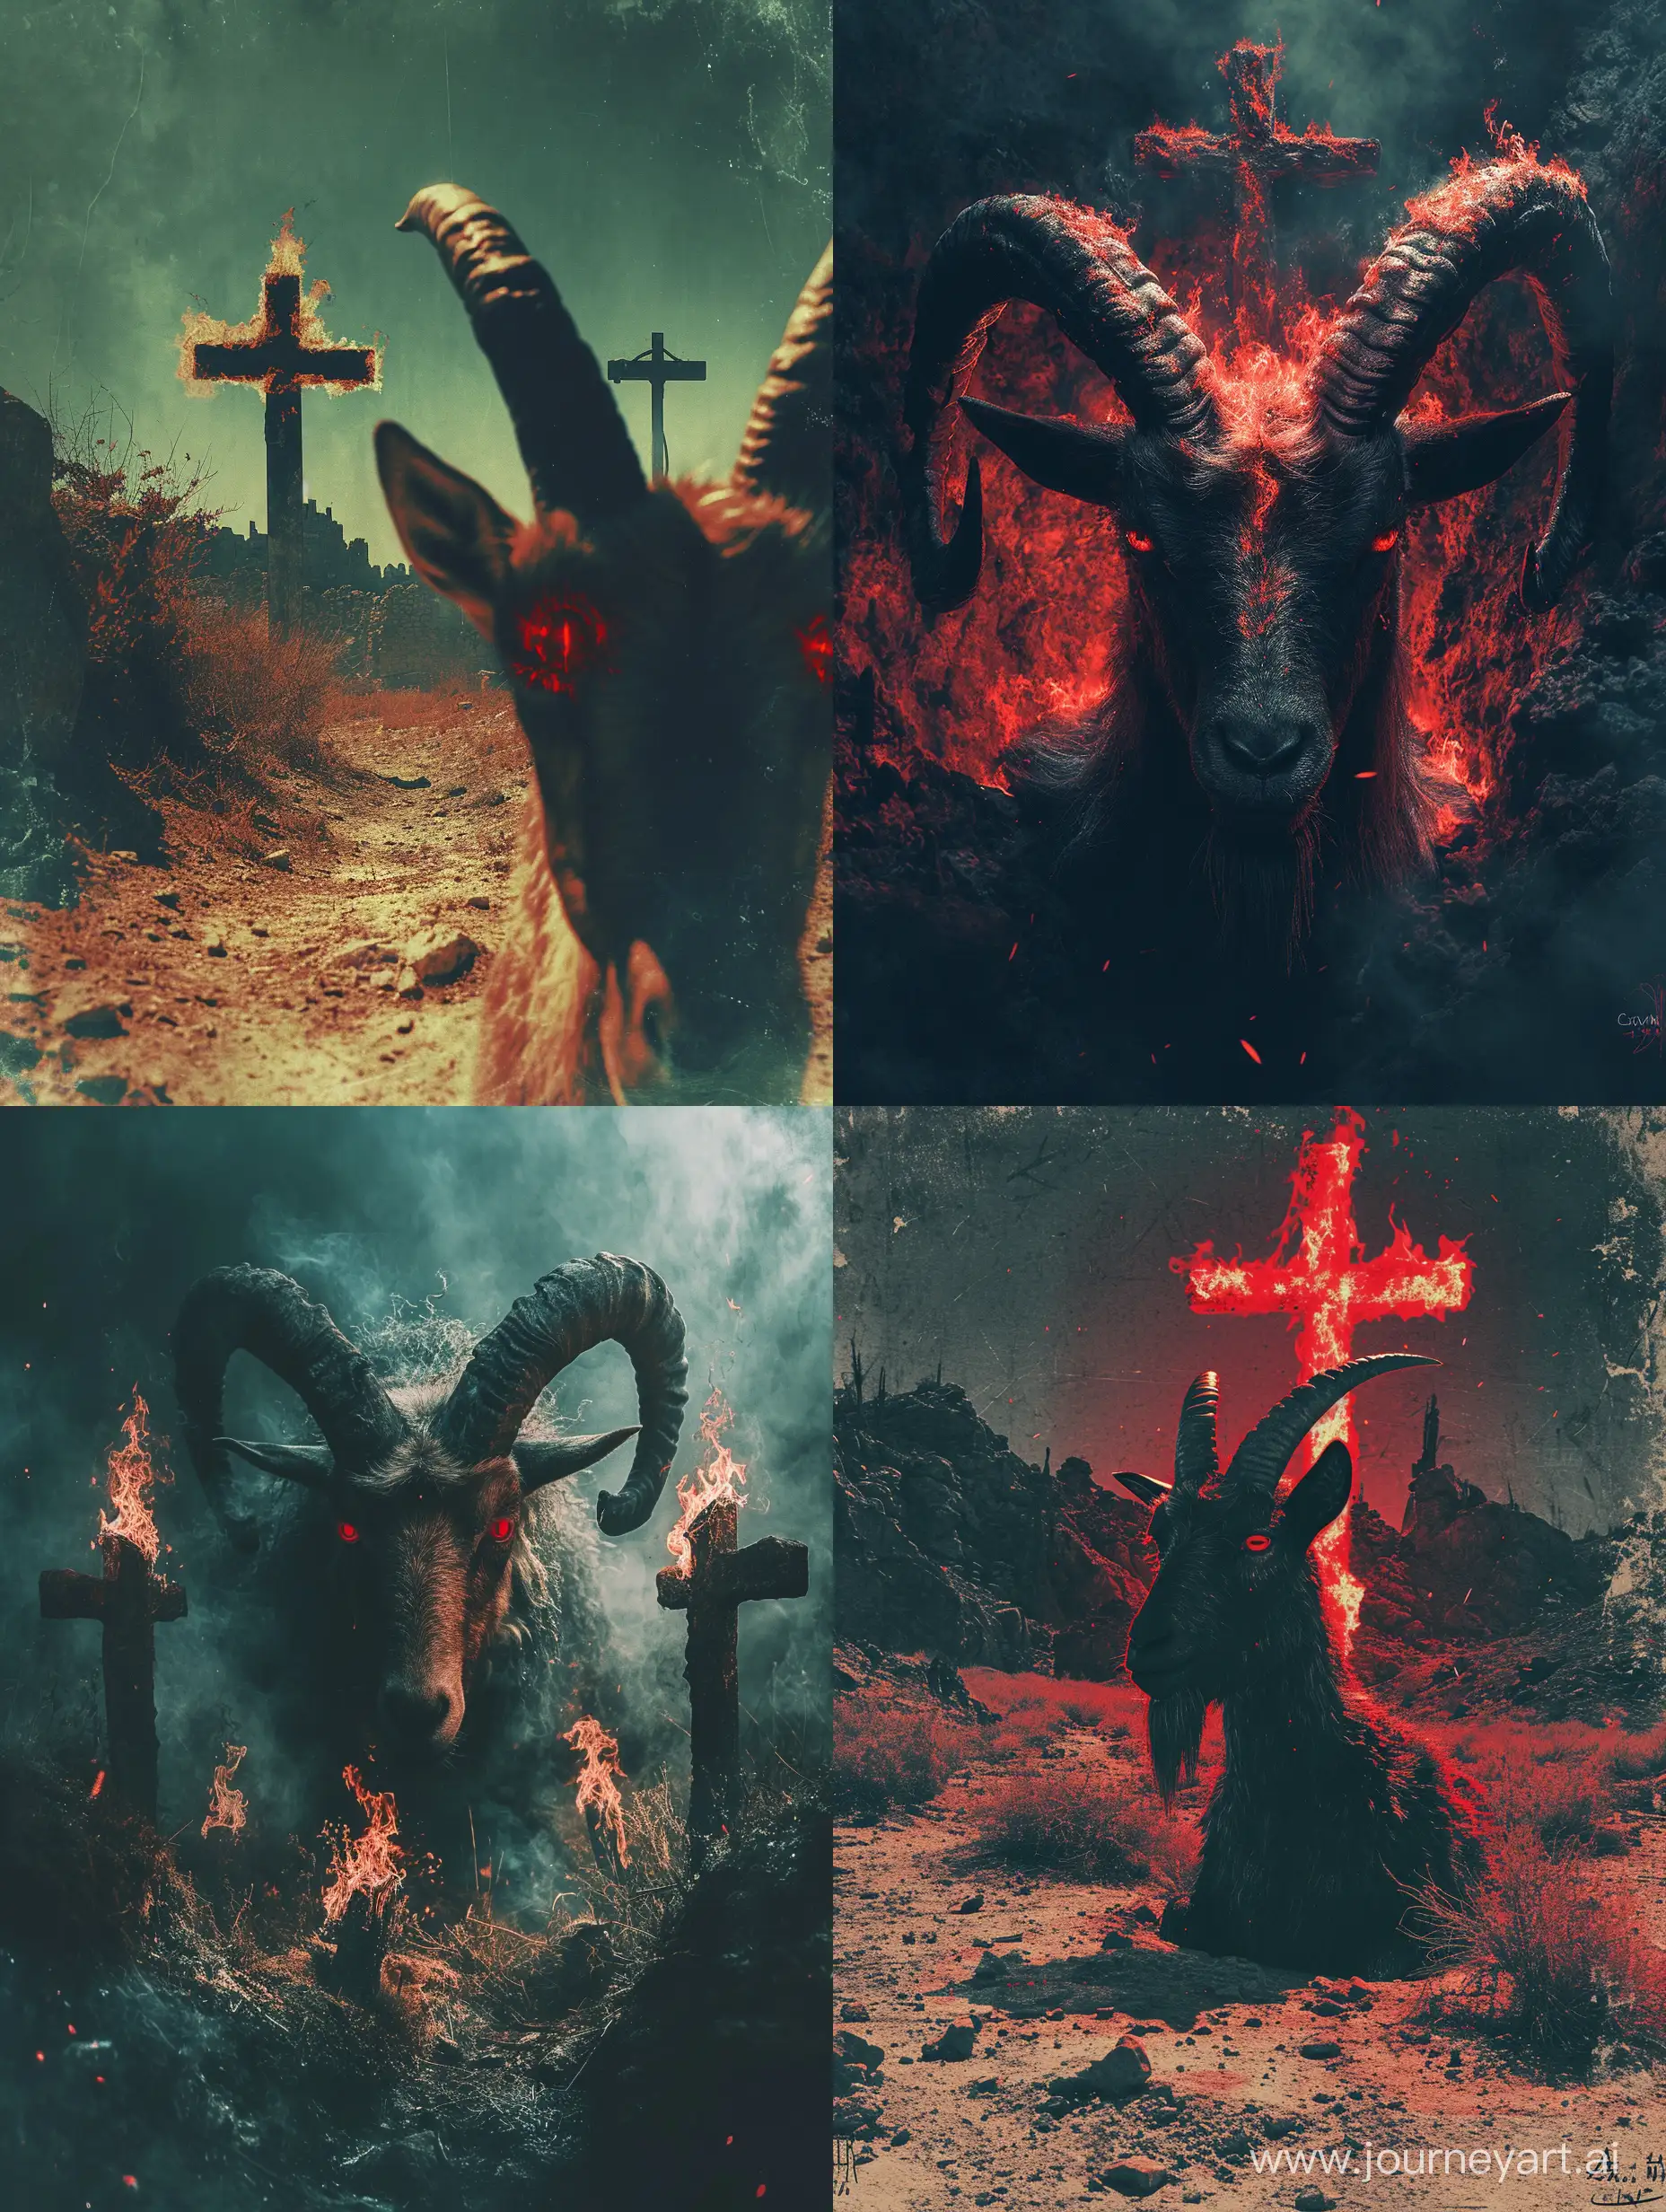 Hellish-Metal-Album-Cover-with-Satanic-Symbols-and-Burning-Crosses